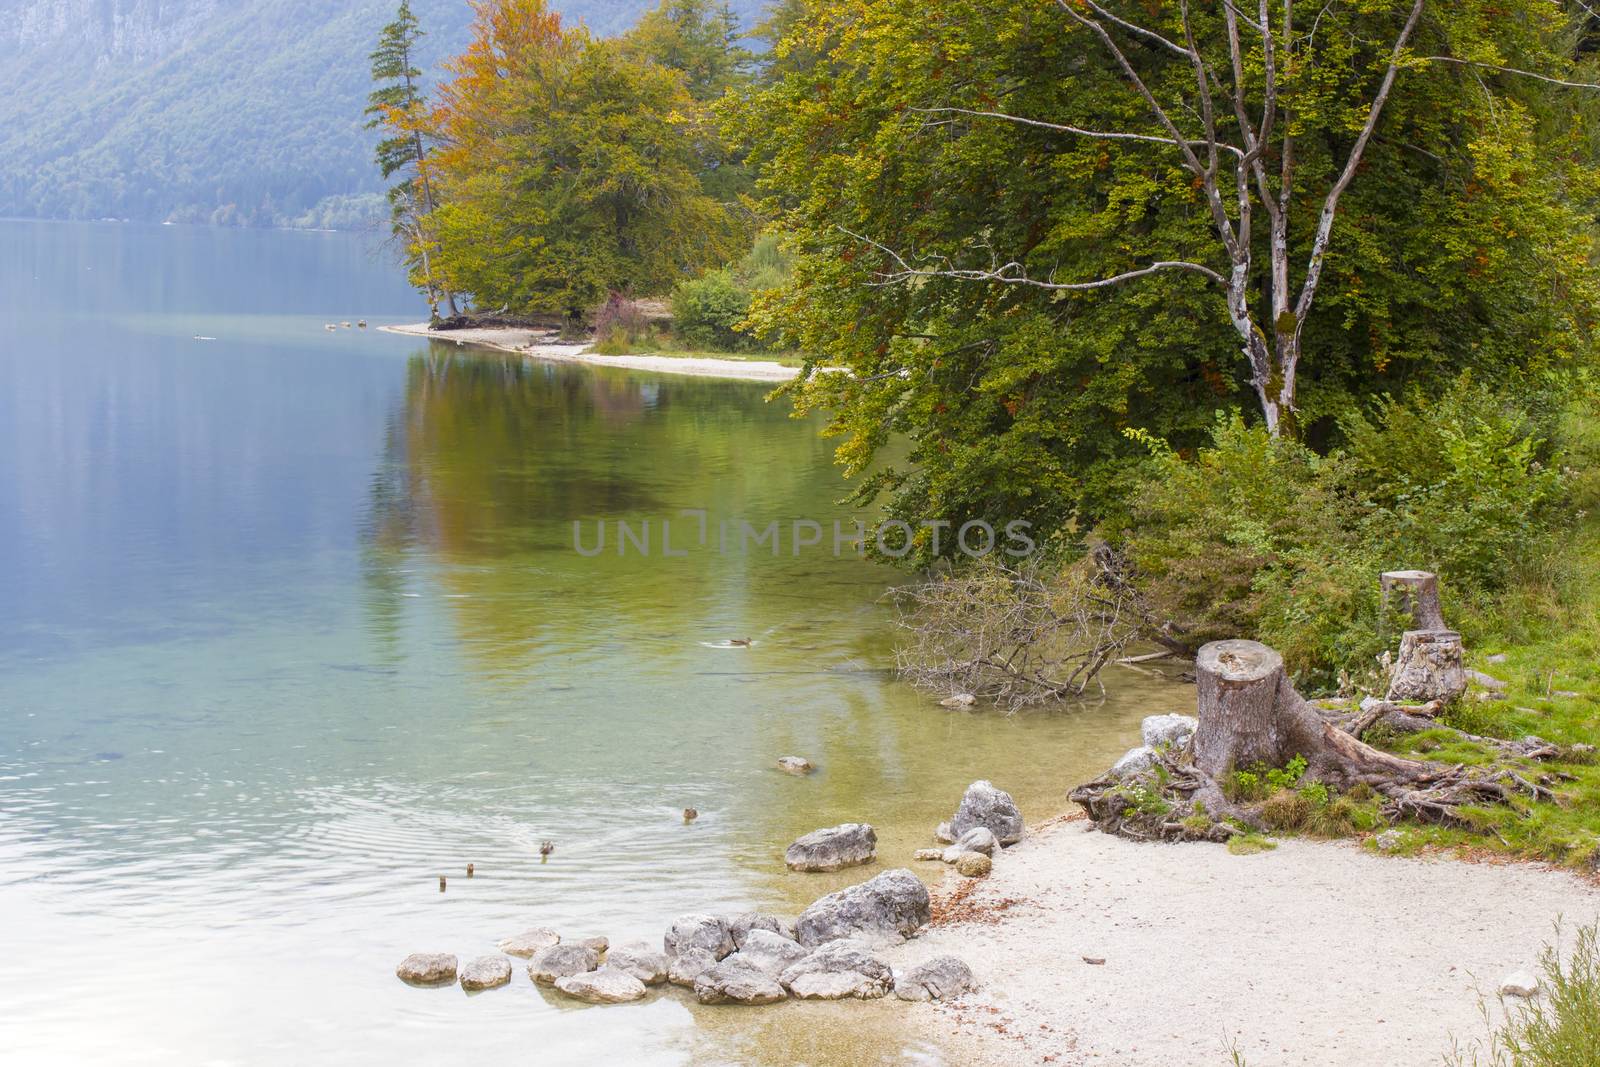 Bohinj lake in Slovenia